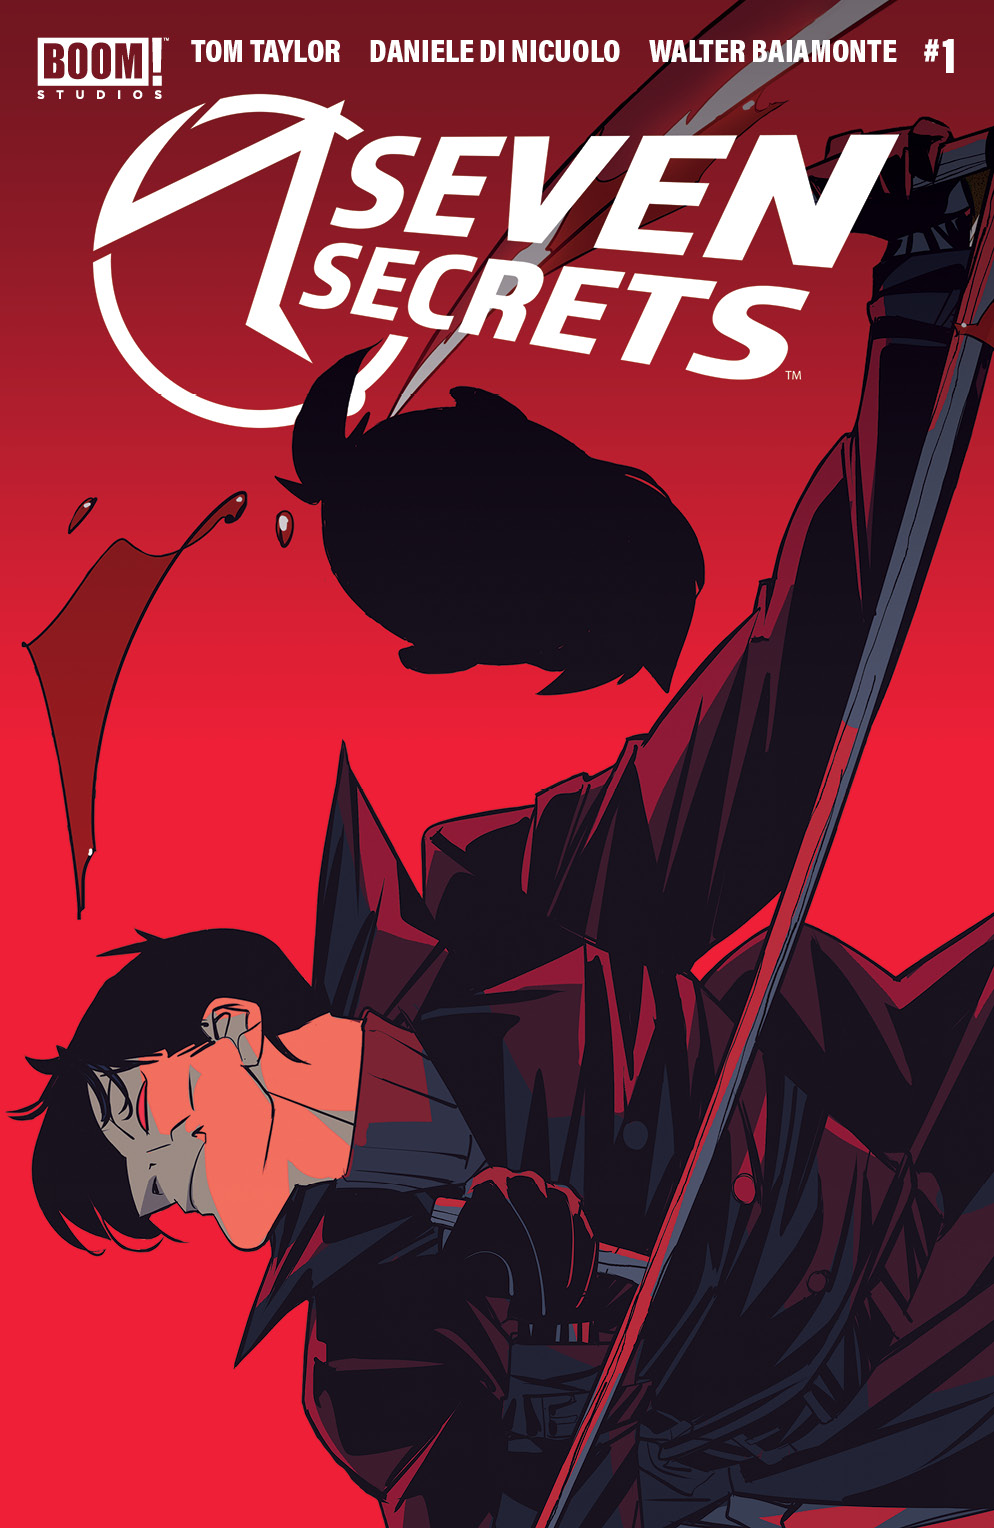 Seven Secrets #1 4th Printing